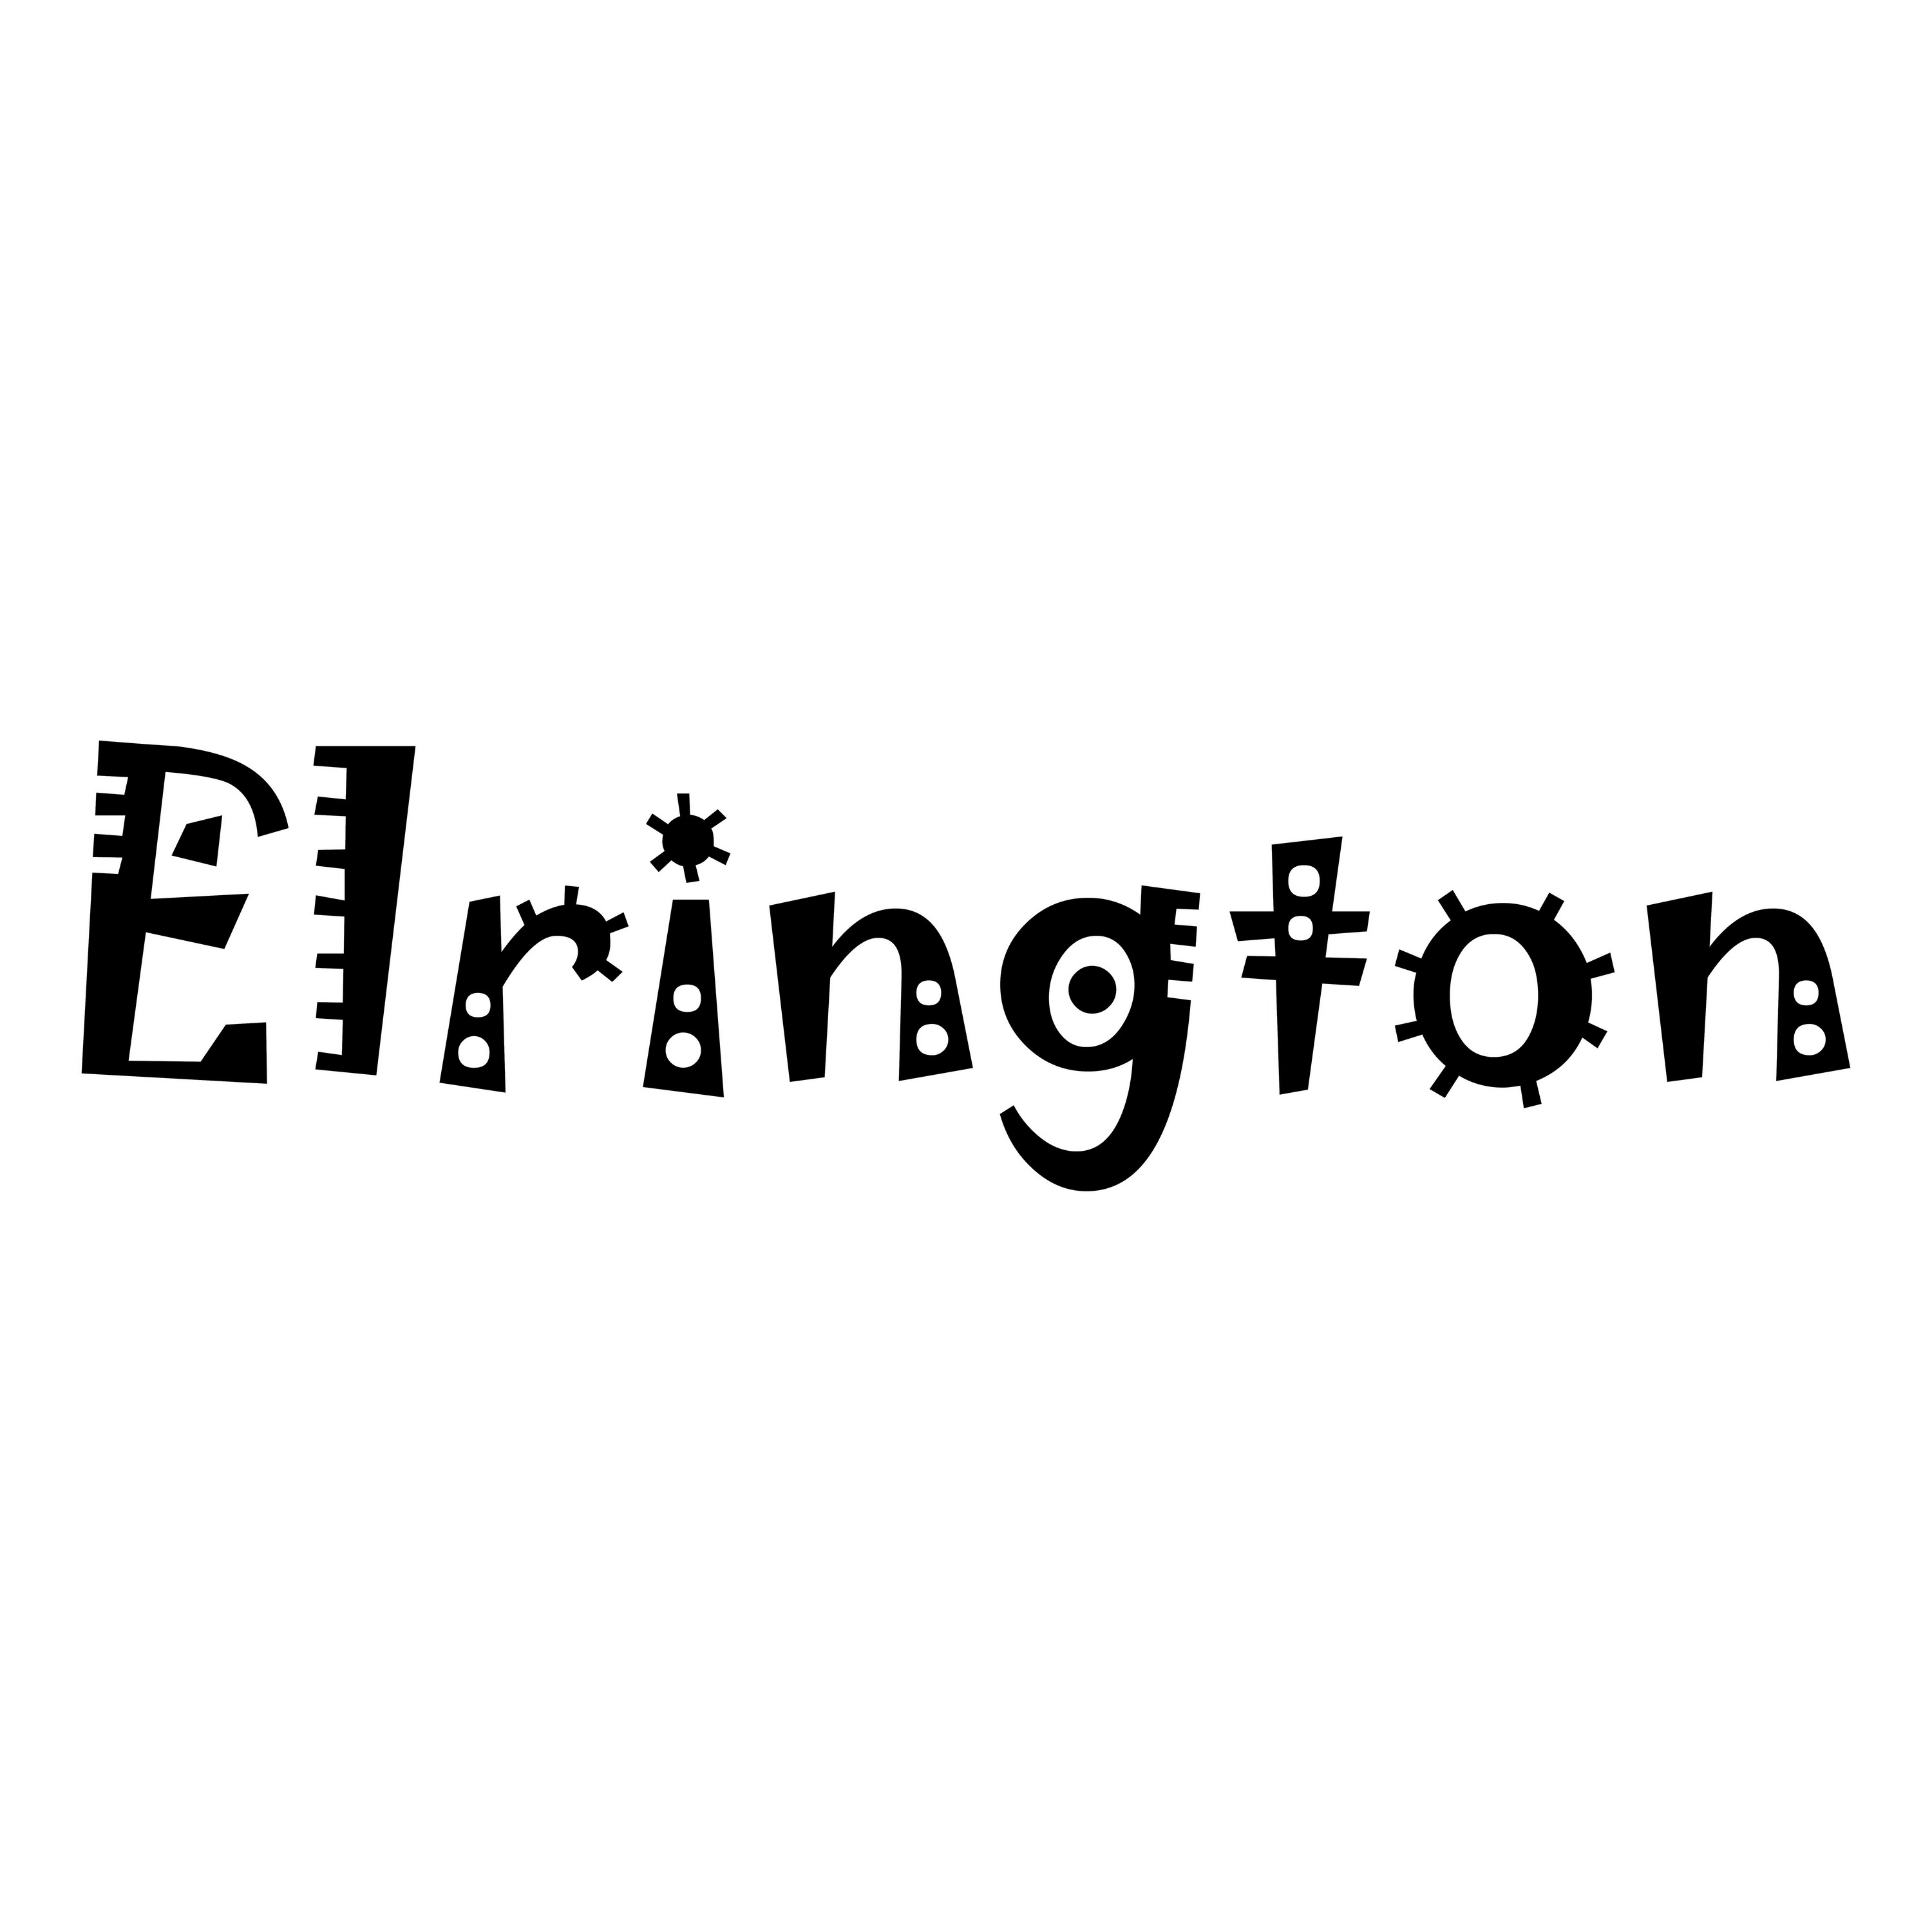 Elrington